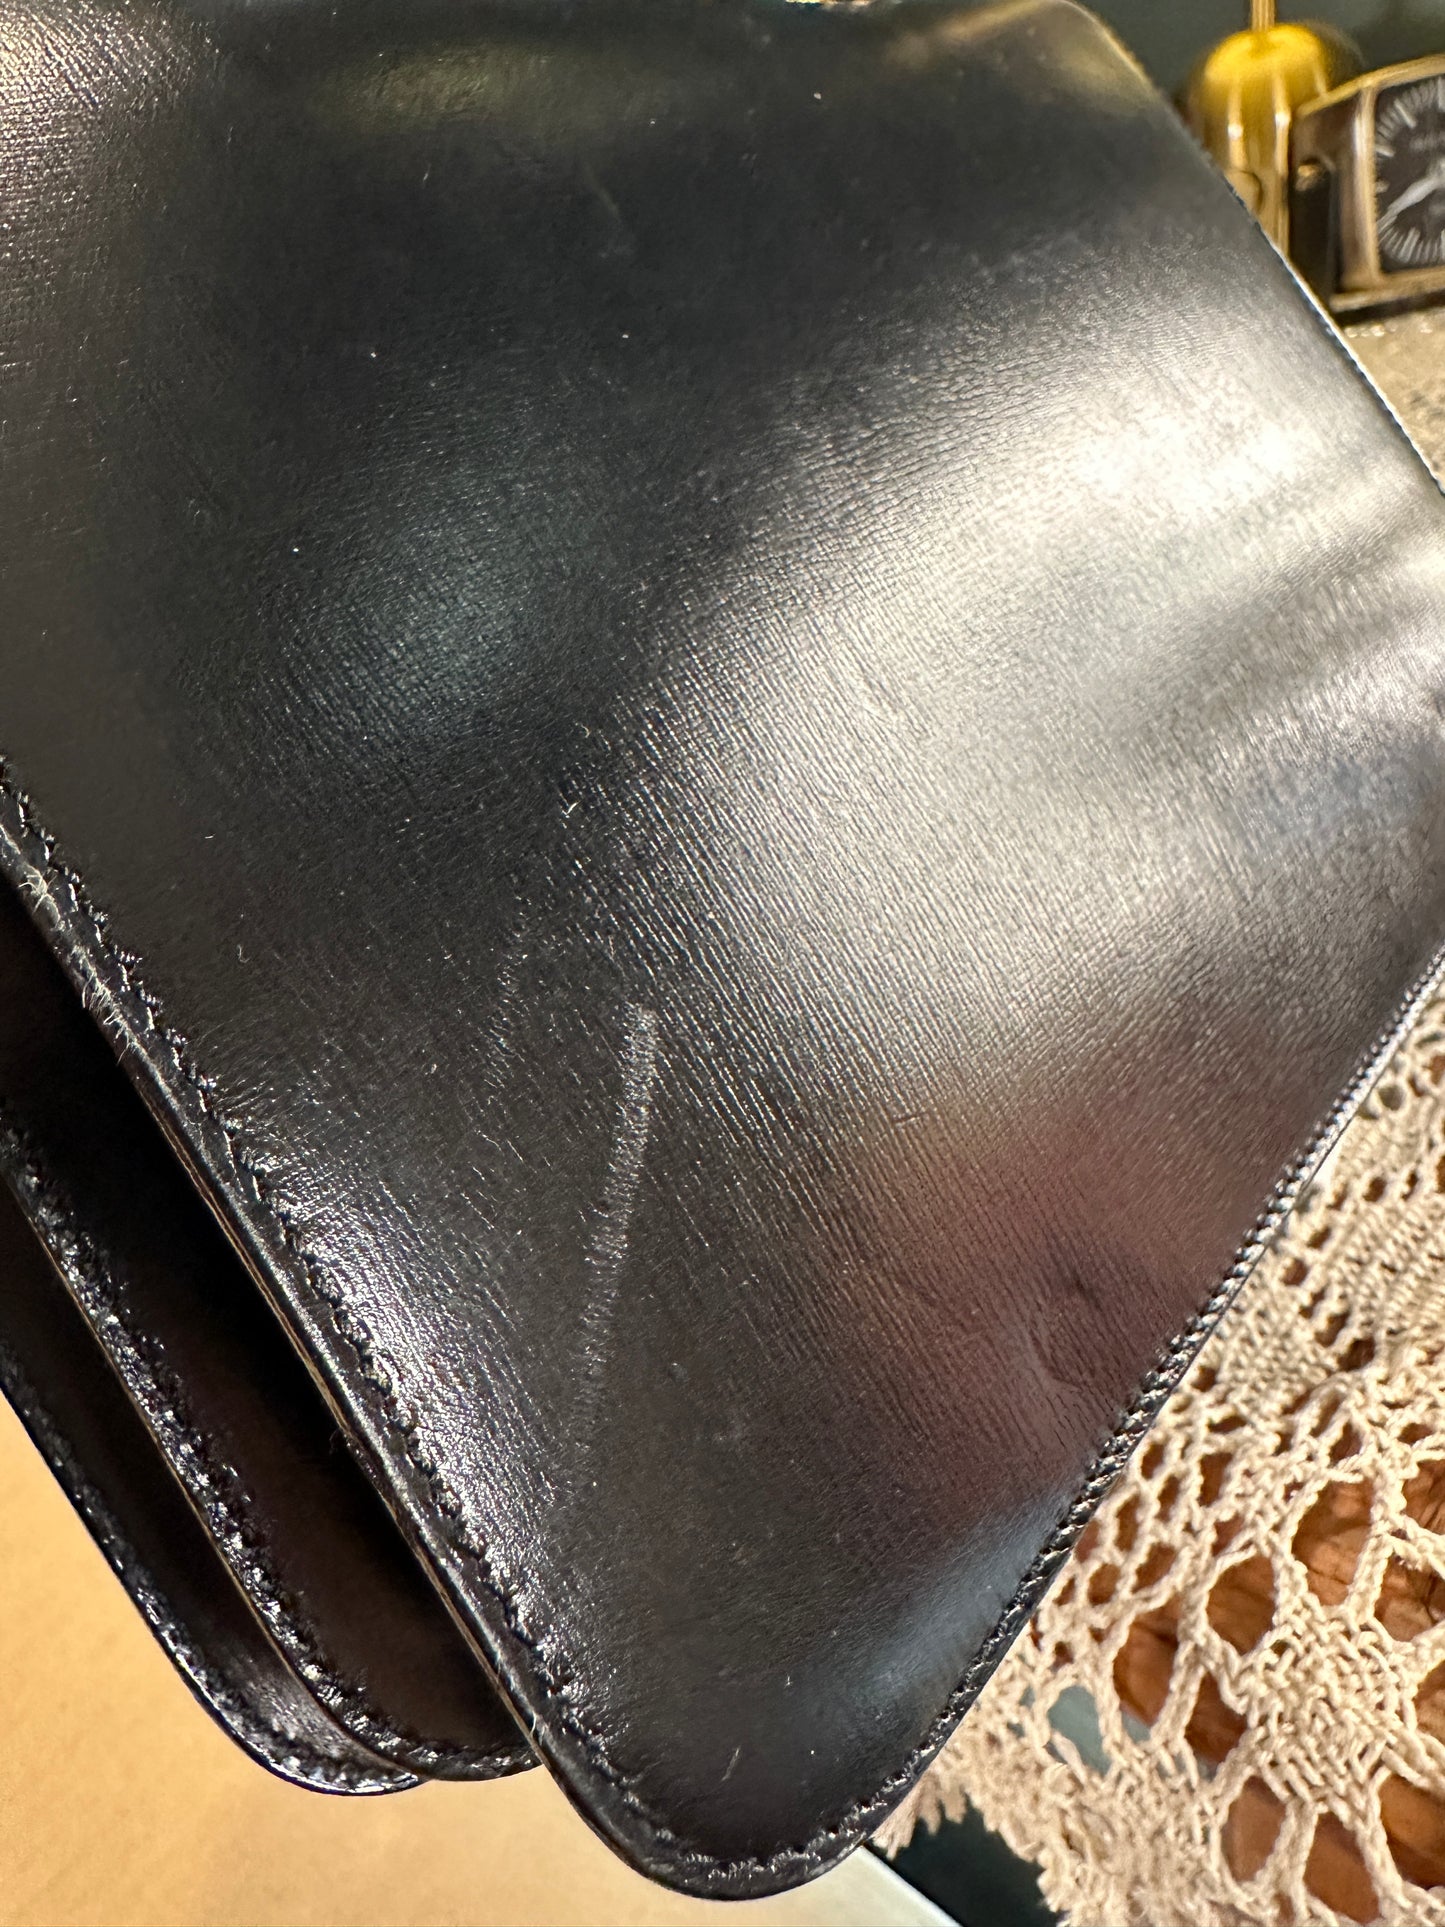 GUCCI VINTAGE 100% Authentic Genuine Top Handle Handbag with GG Buckle, 1980's, Good Condition